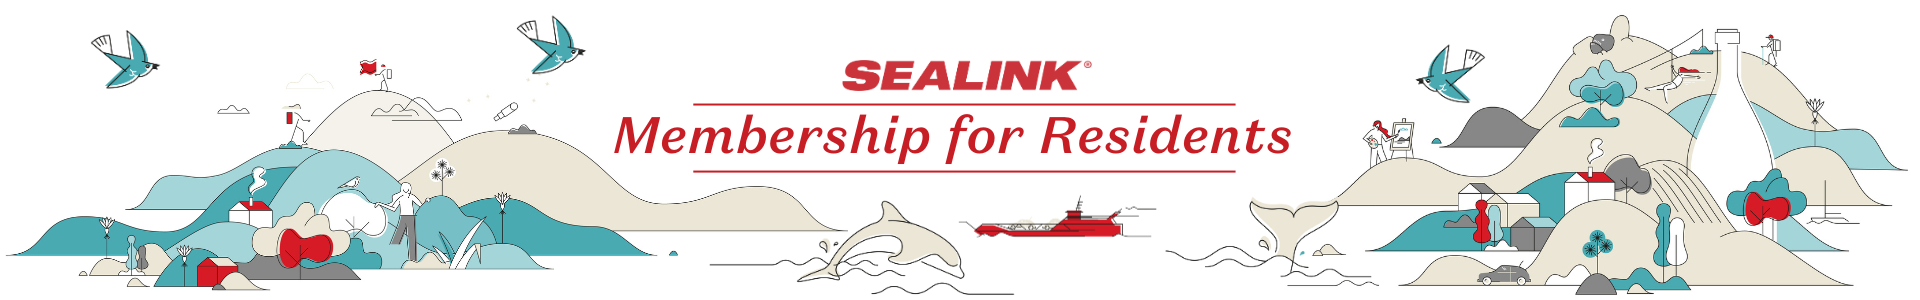 SeaLink membership for residents